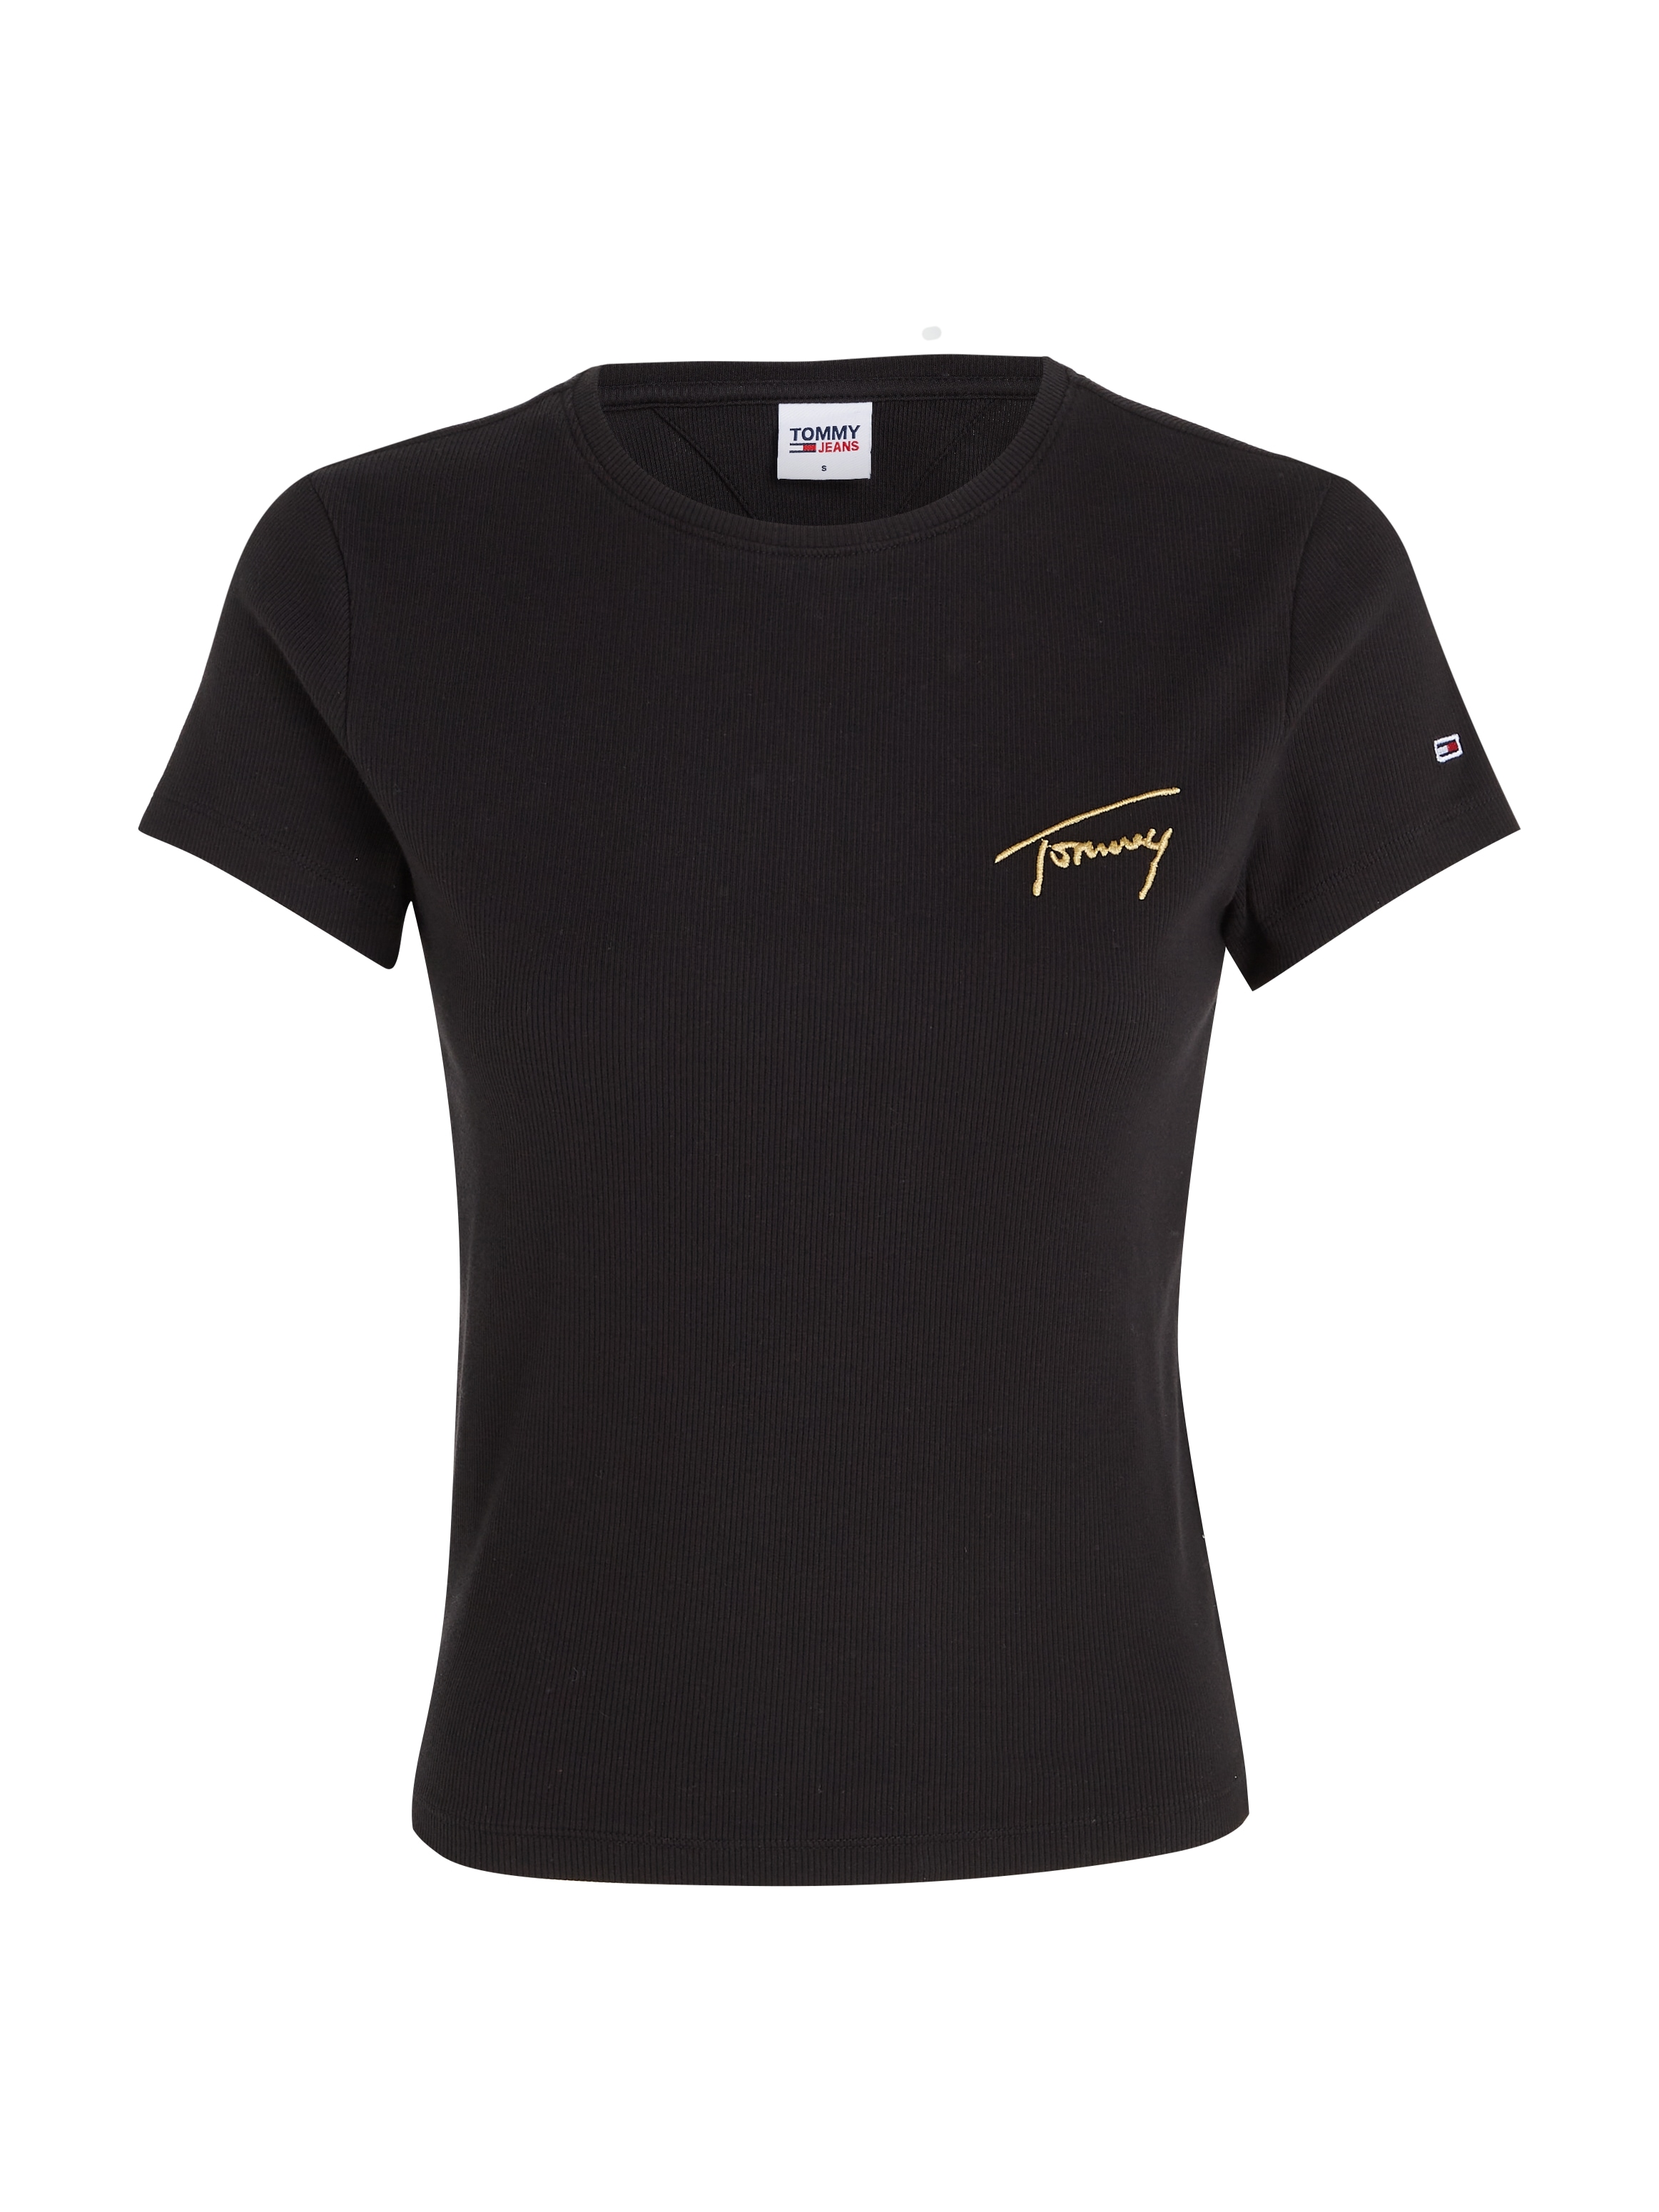 Signature Tommy BBY Logo-Schriftzug »TJW walking SS«, TEE goldfarbenen I\'m mit SIGNATURE GOLD T-Shirt | kaufen Jeans online